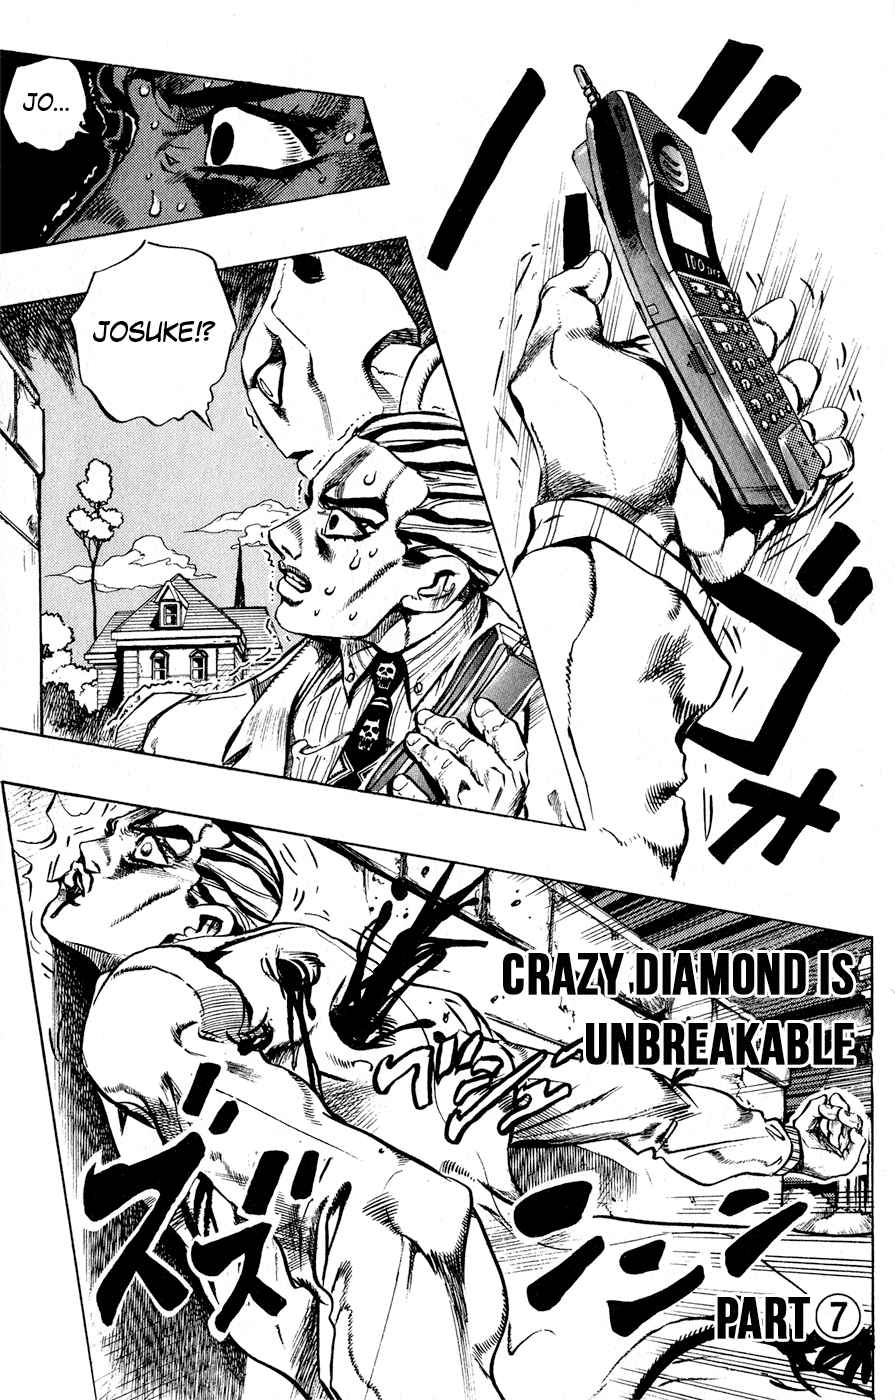 JoJo's Bizarre Adventure Part 4 Diamond is Unbreakable Vol. 18 Ch. 169 Crazy Diamond is Unbreakable Part 7